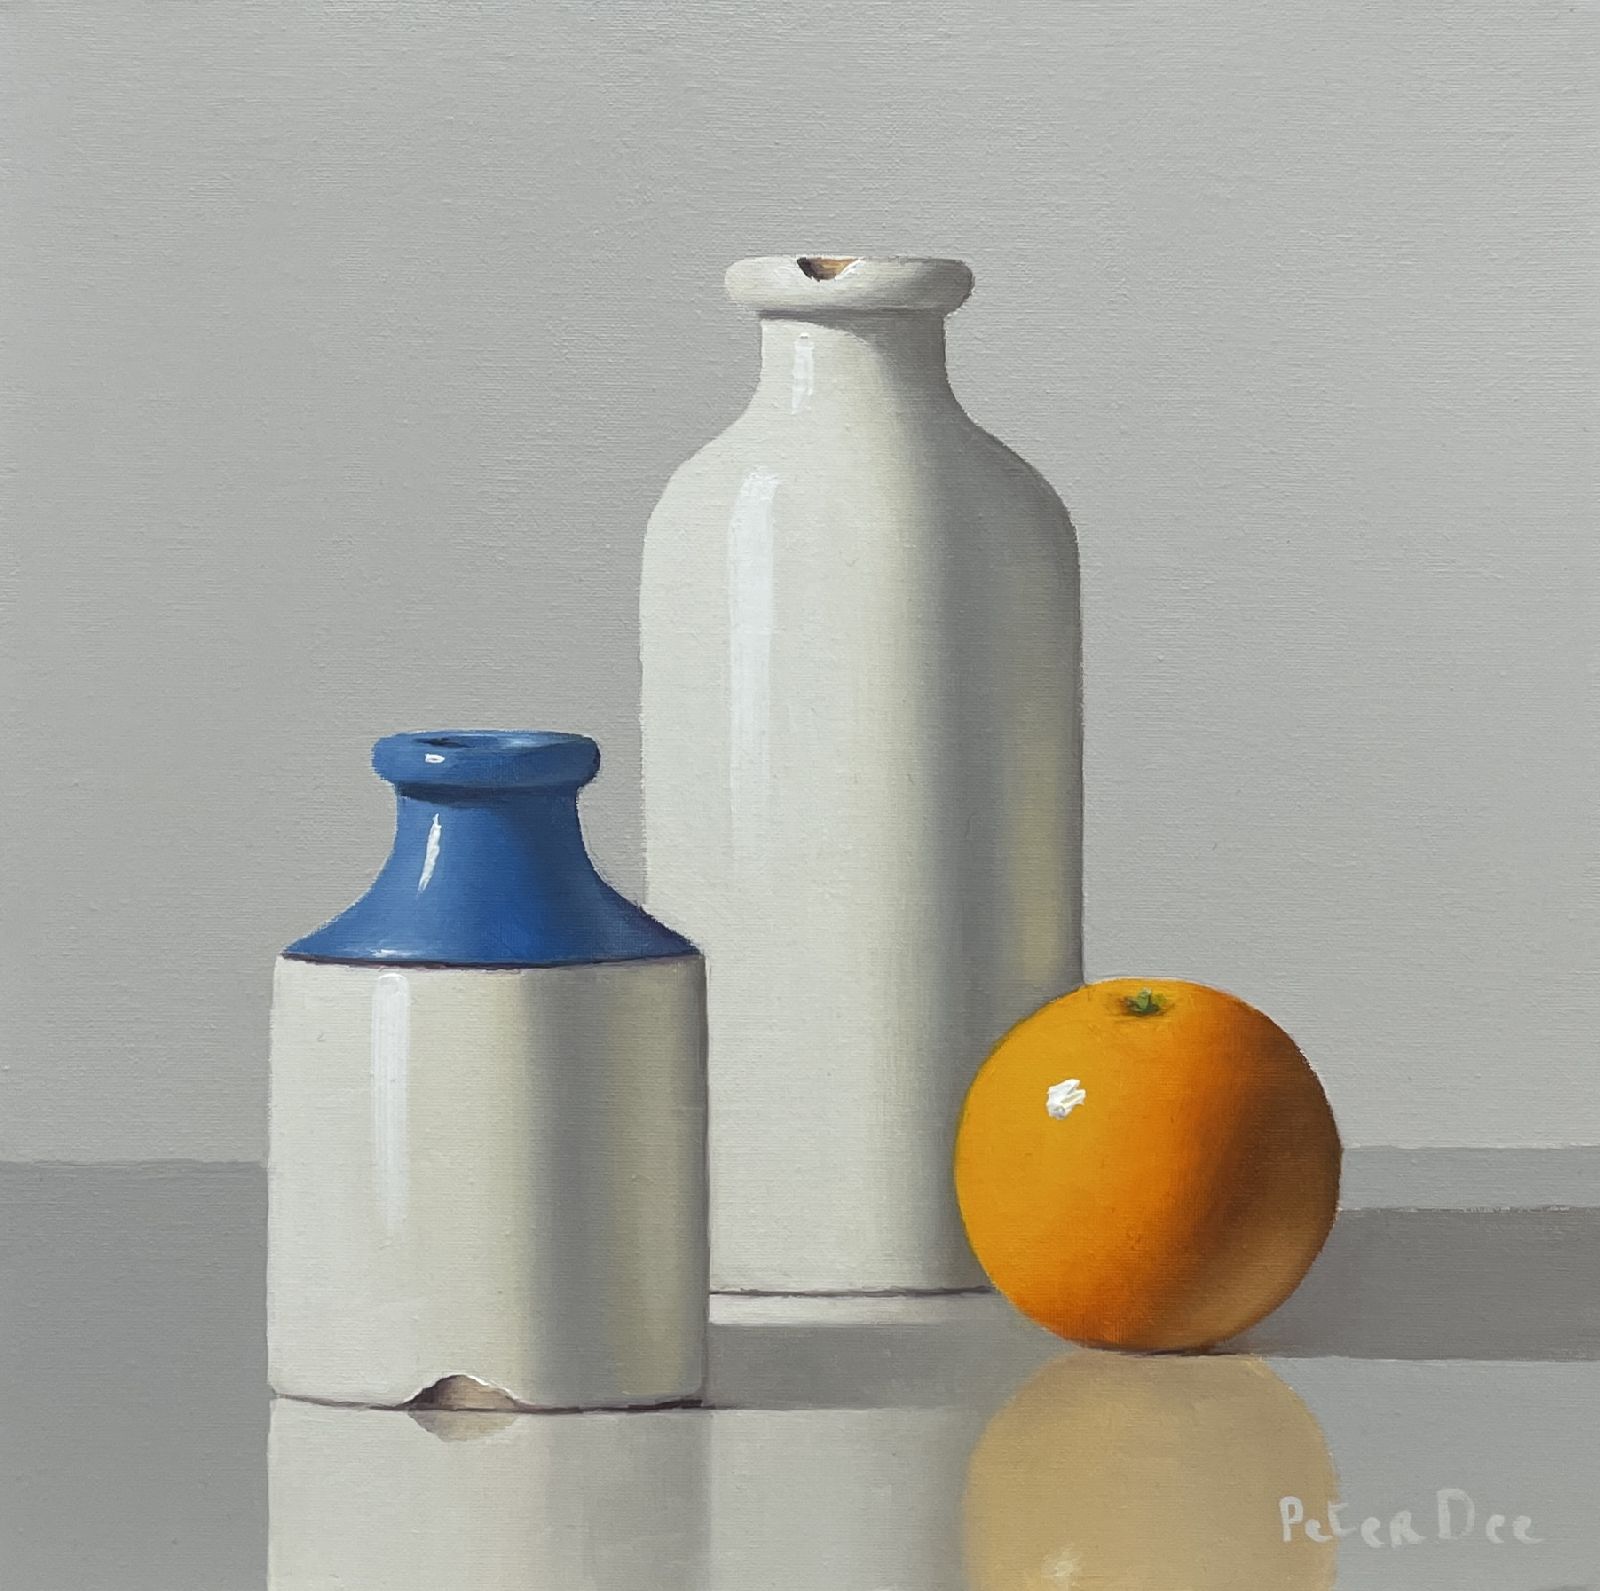 Peter Dee - Stoneware bottles with orange